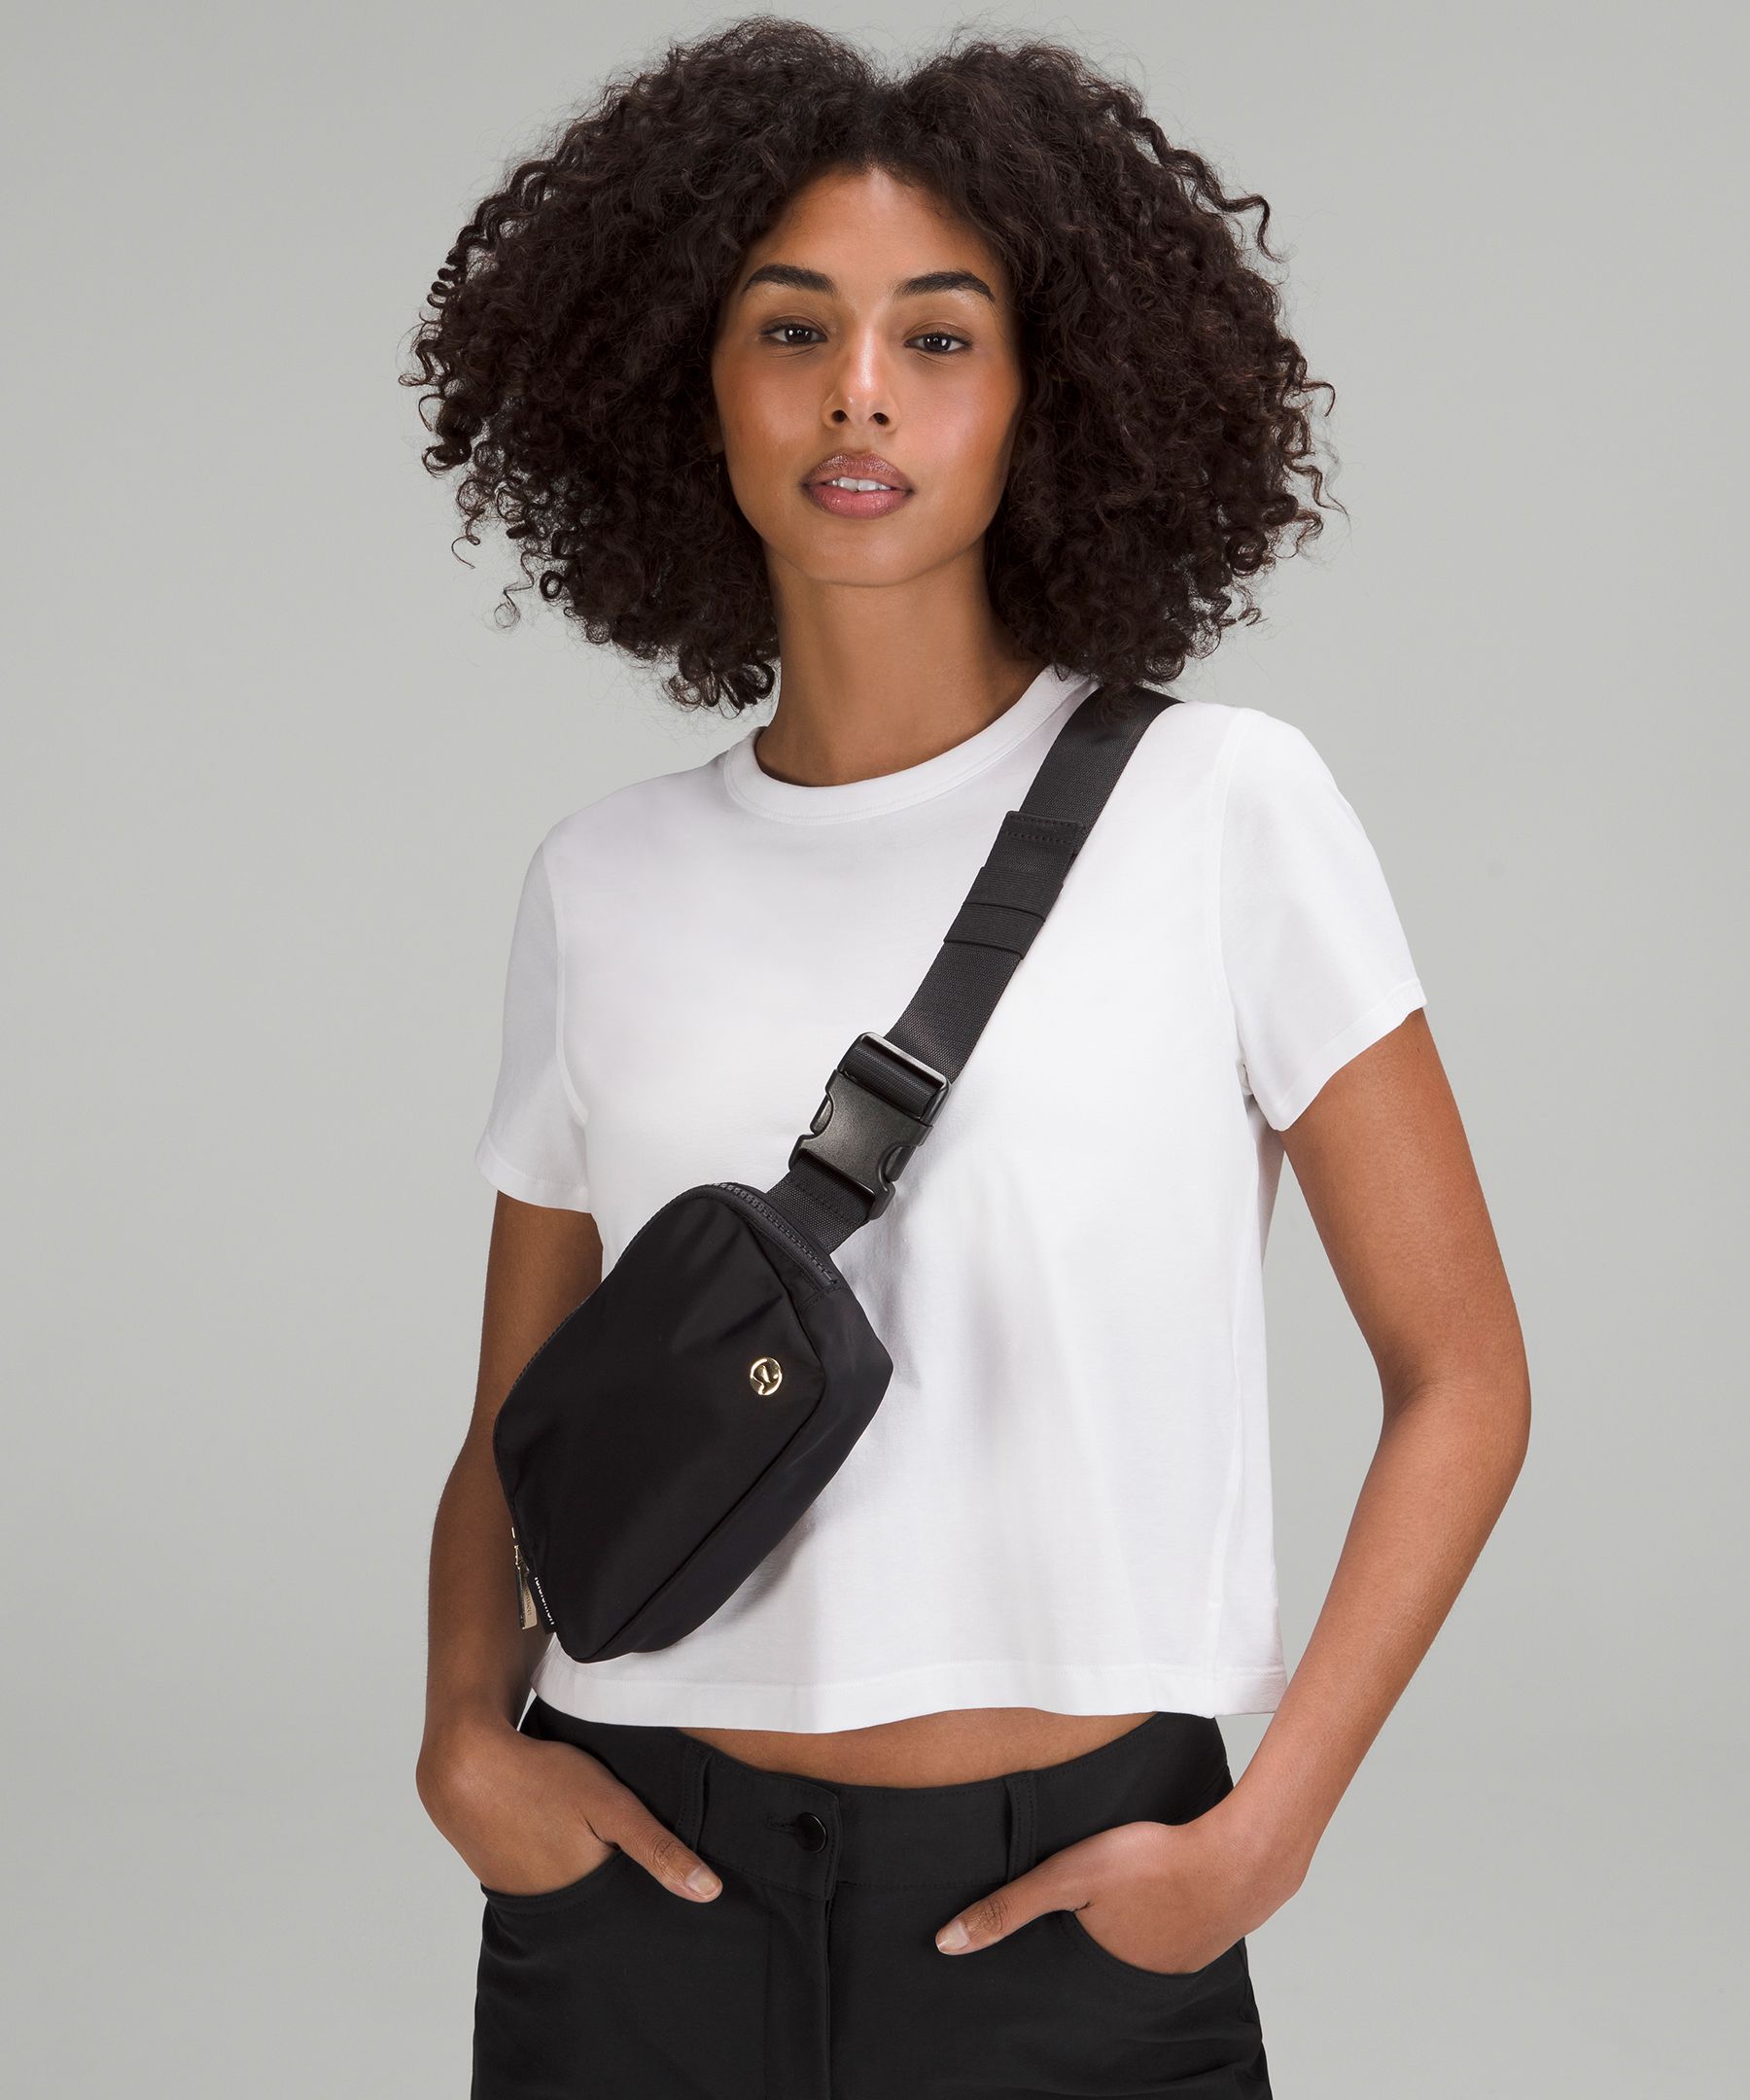  Black Belt Bag for Women Fashion Waist Fanny Packs